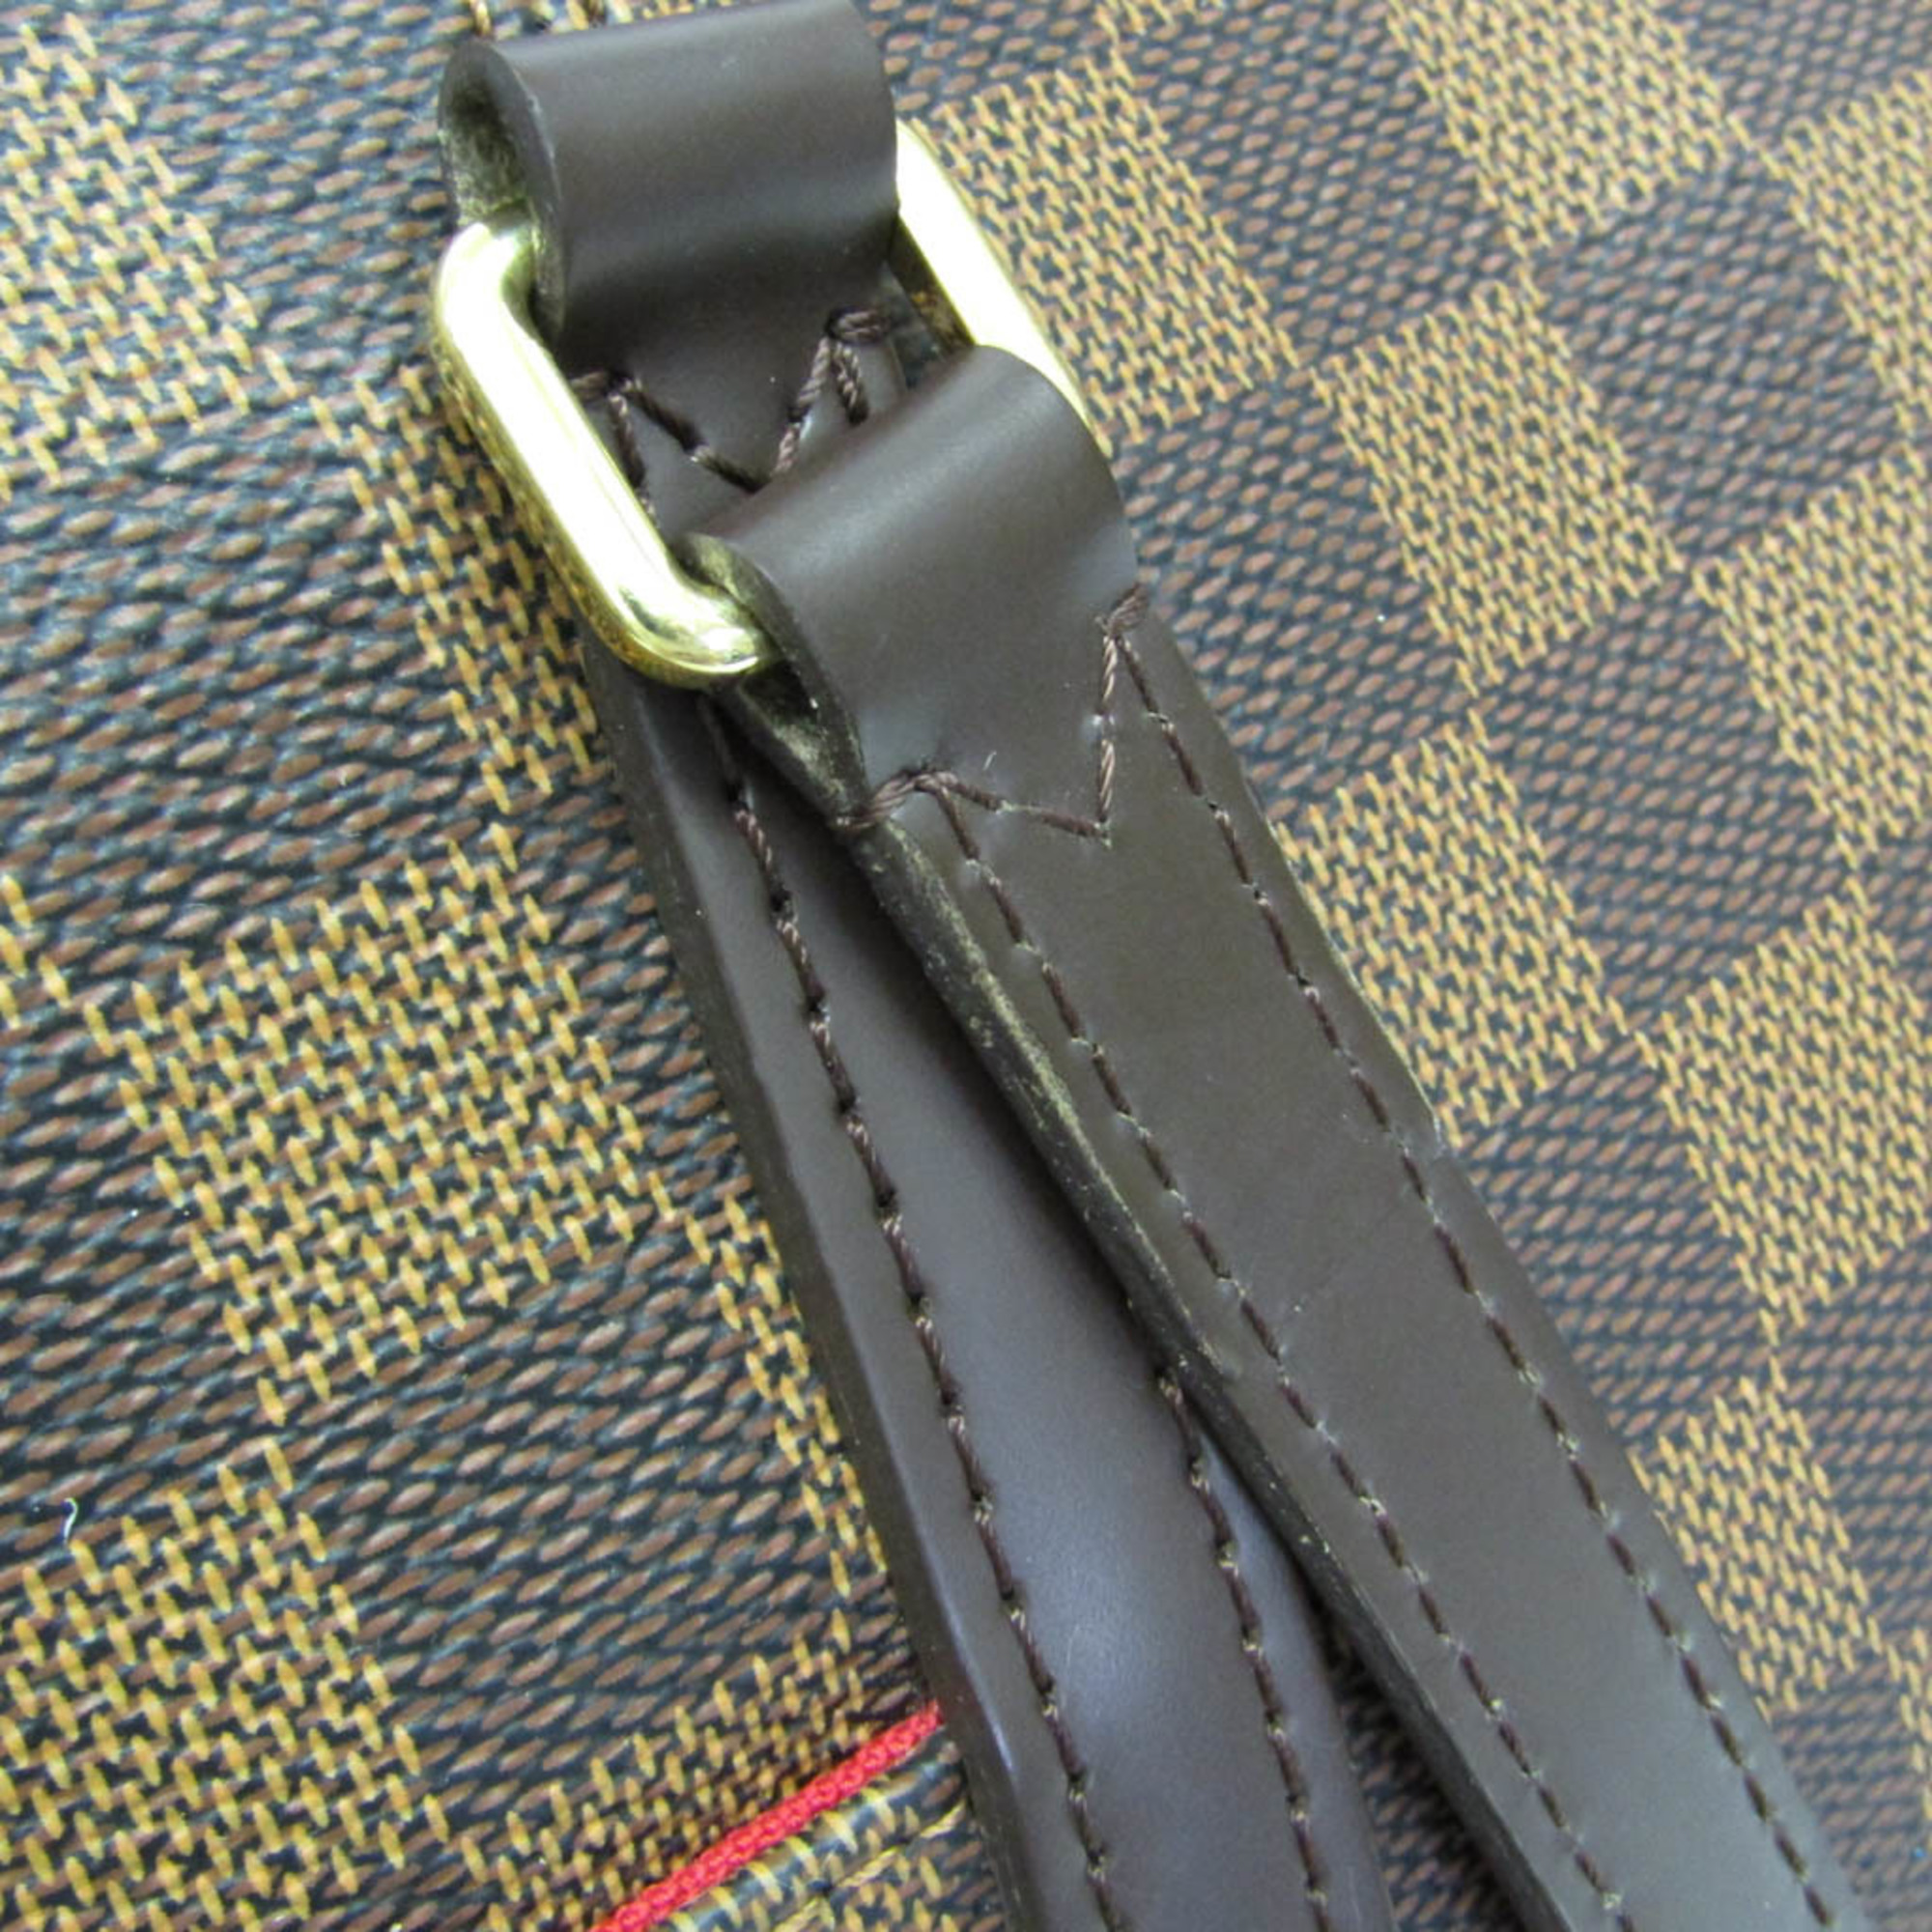 Louis Vuitton Damier Totally MM N41281 Women's Tote Bag Ebene